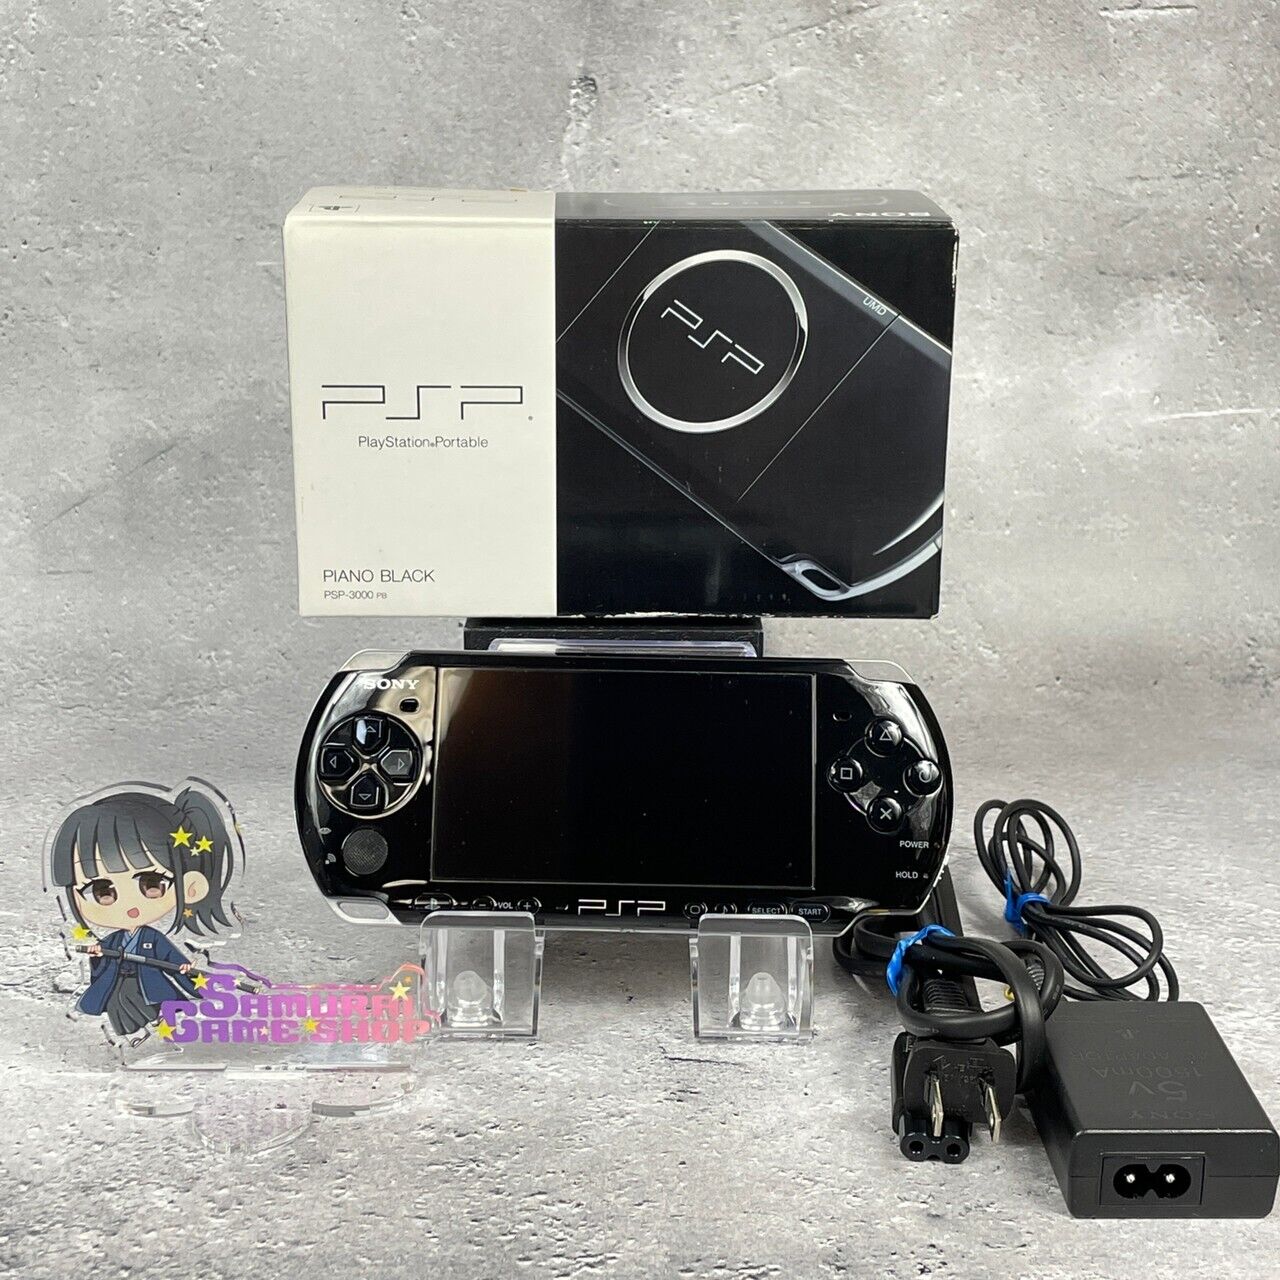 SONY PlayStationPortable PSP-3000 PB - テレビゲーム